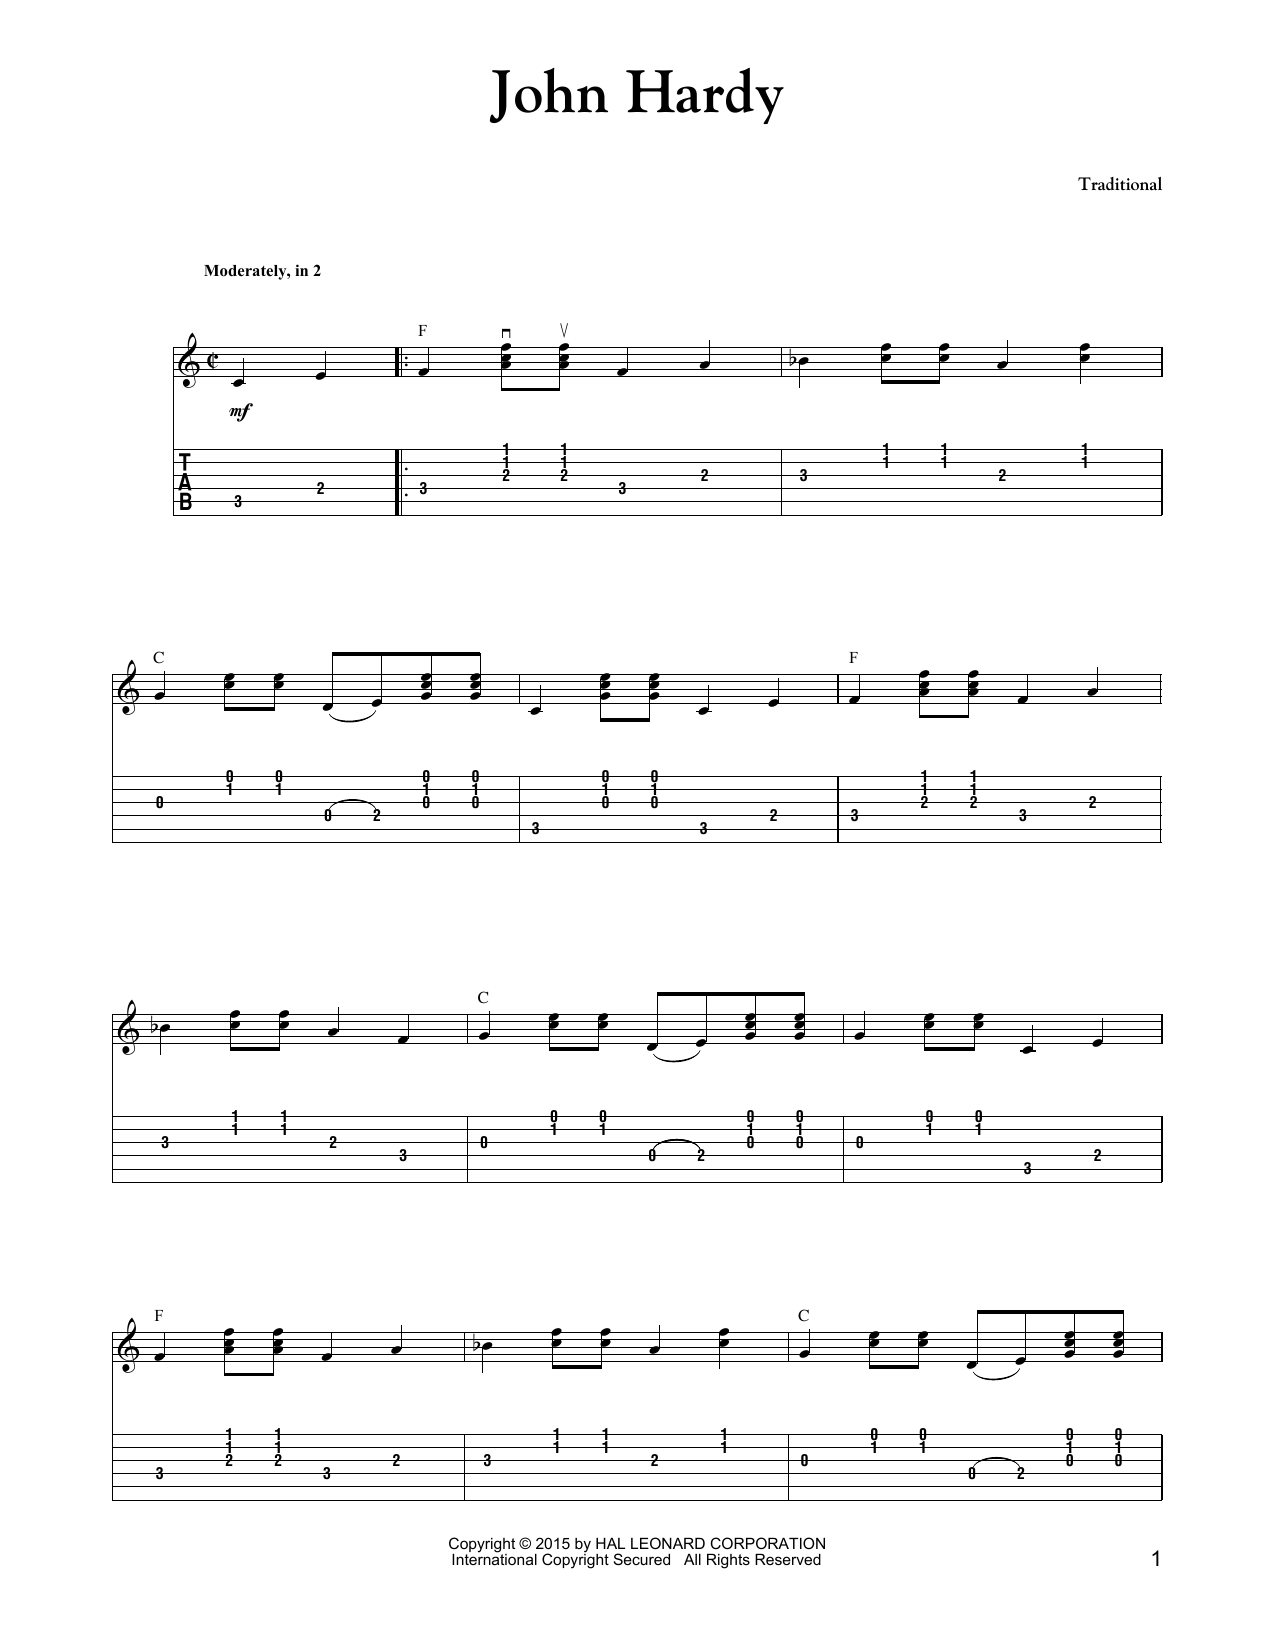 Carter Style Guitar John Hardy Sheet Music Notes & Chords for Guitar Tab - Download or Print PDF